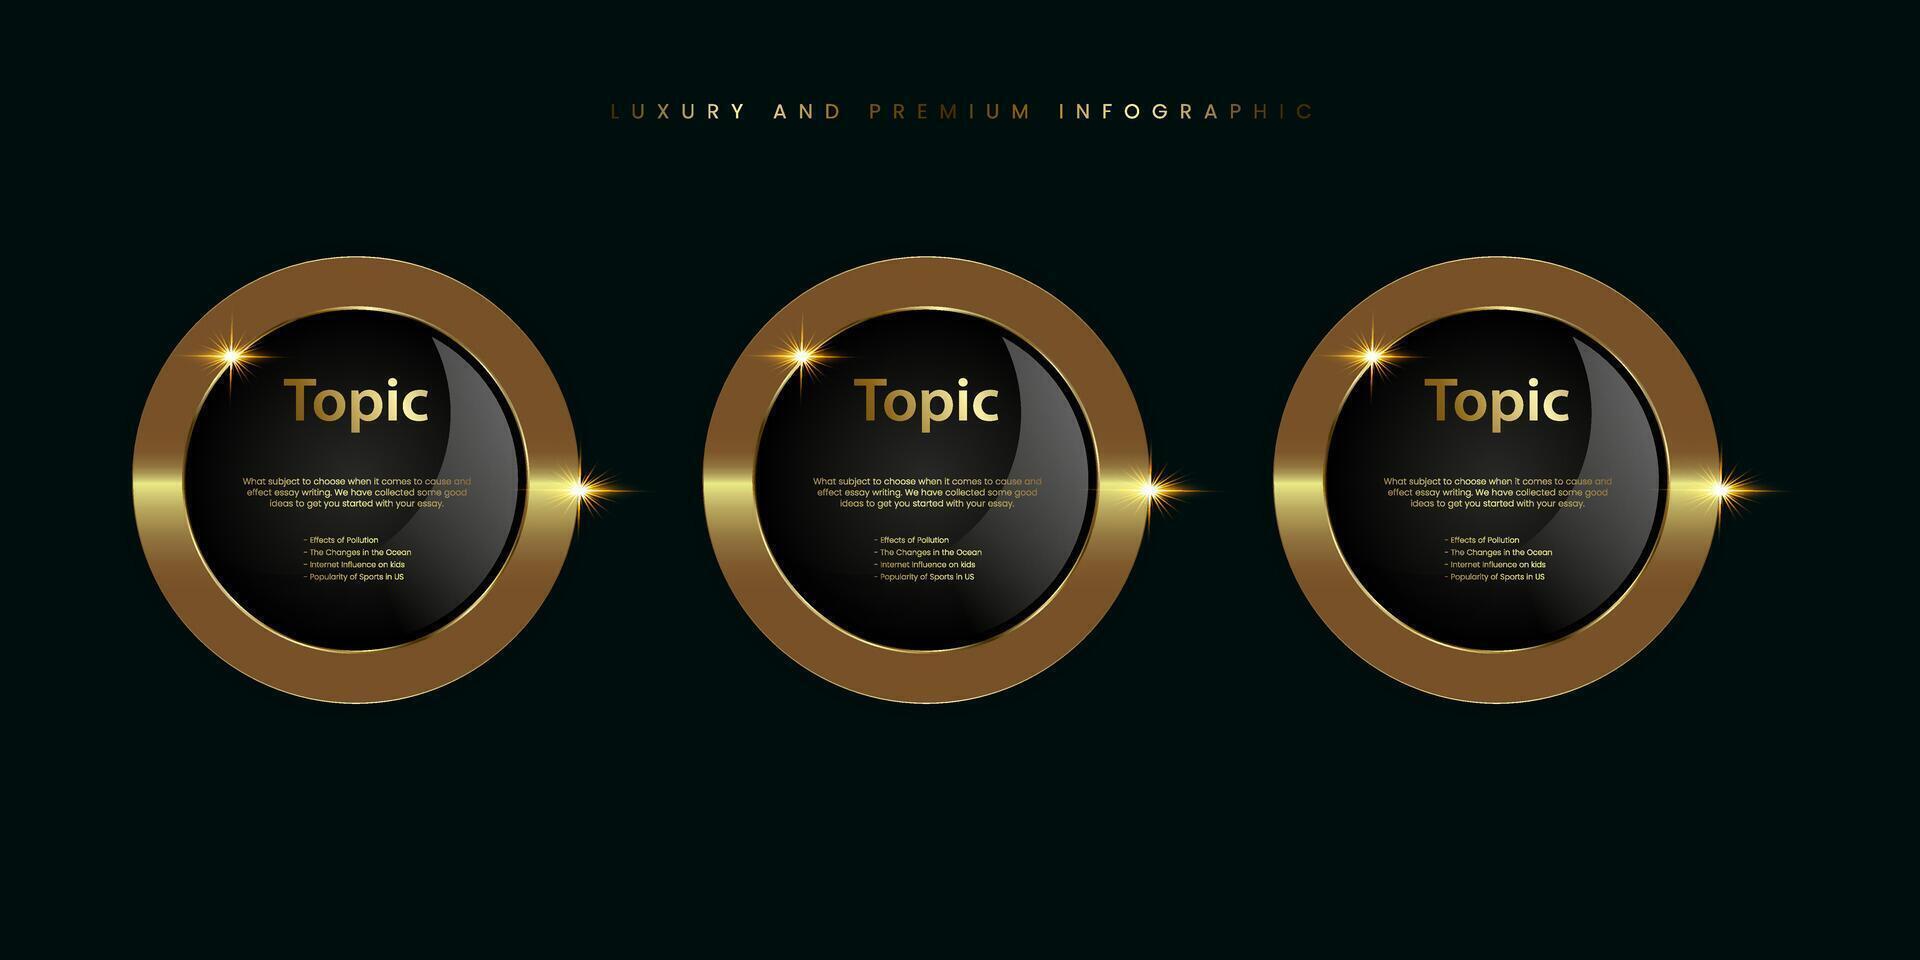 Group of three Luxury, Gold shiny button, metallic golden infographic, vector icon on Dark